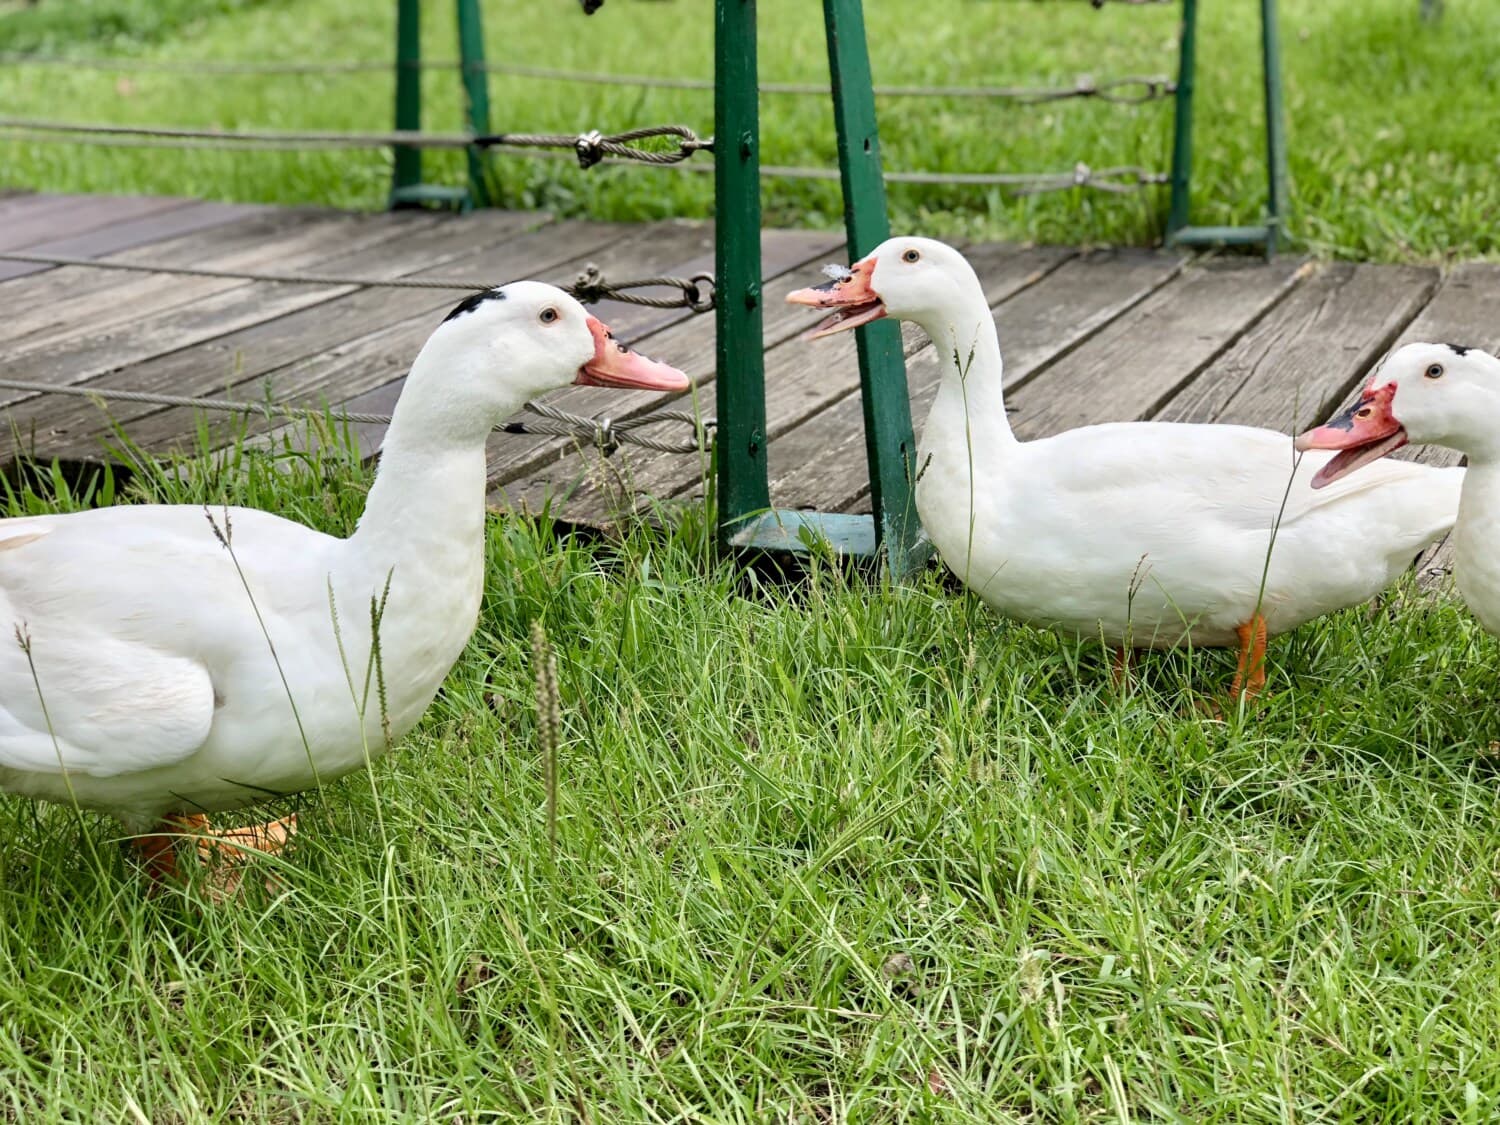 white, ducks, domestic, flock, animals, grazing, lawn, backyard, poultry, beak